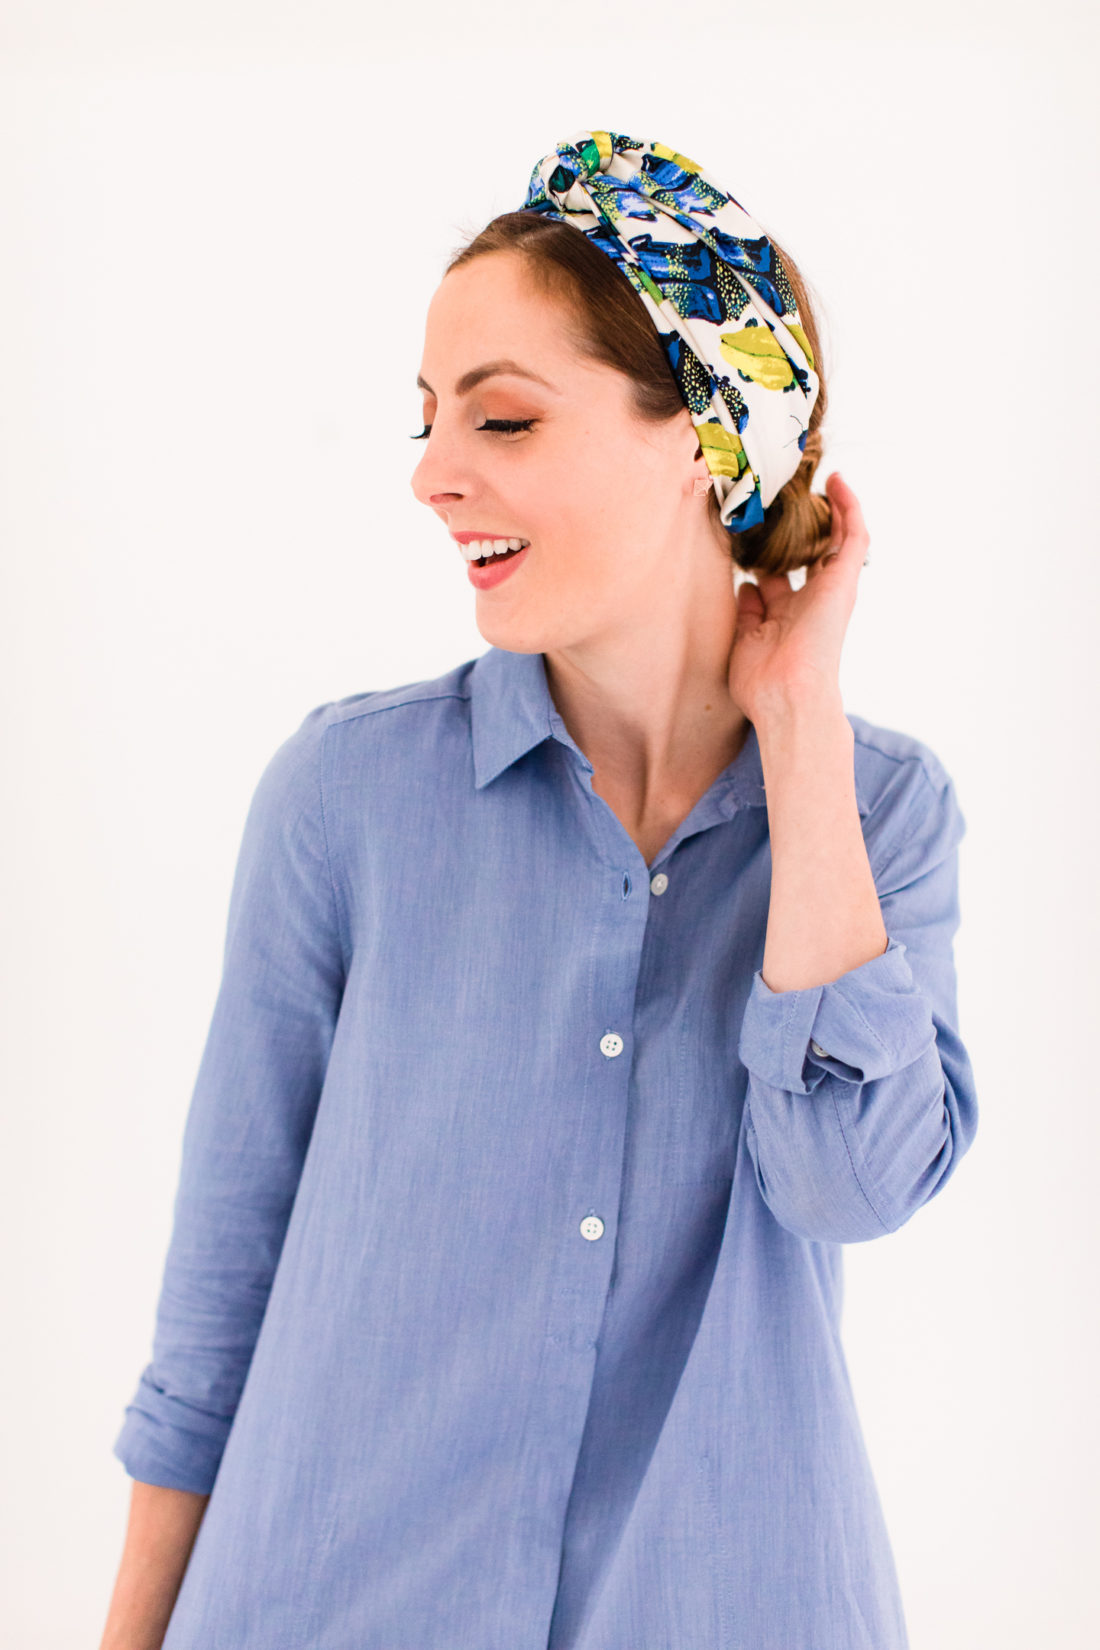 Eva Amurri Martino wears a long skinny printed silk scarf tied around head like a turban